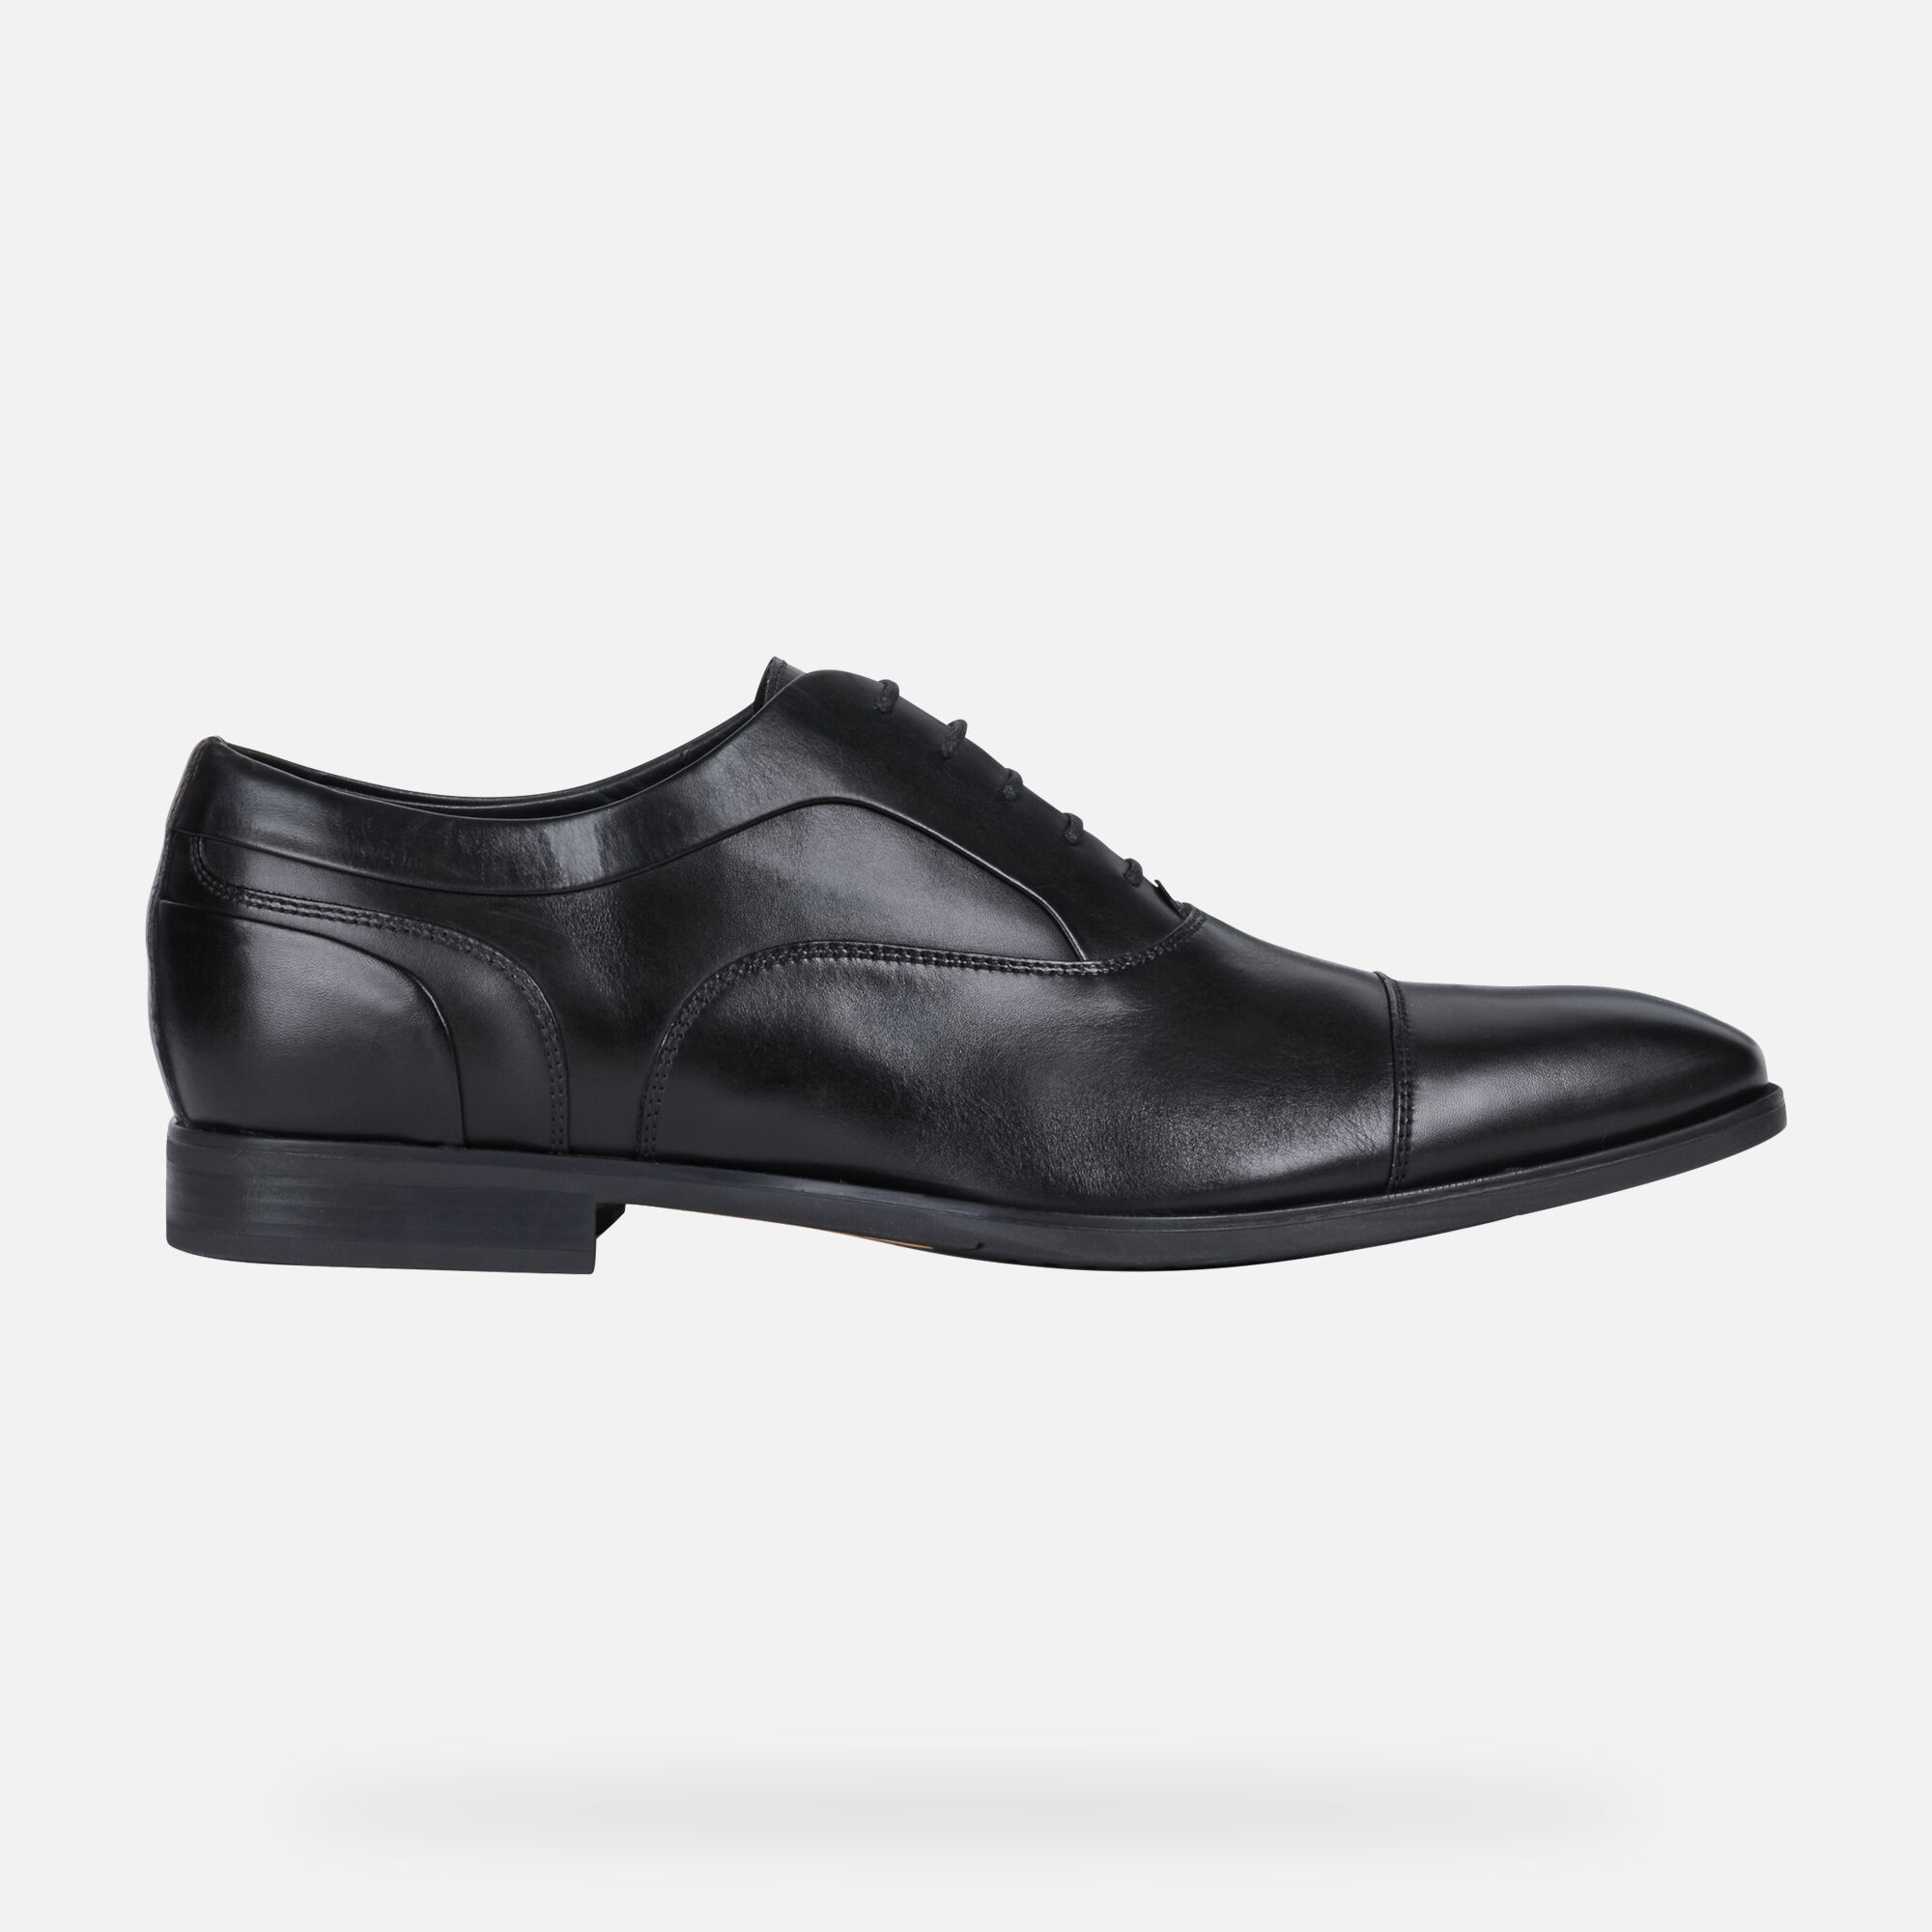 scarpe eleganti nere clearance d17f6 d78be